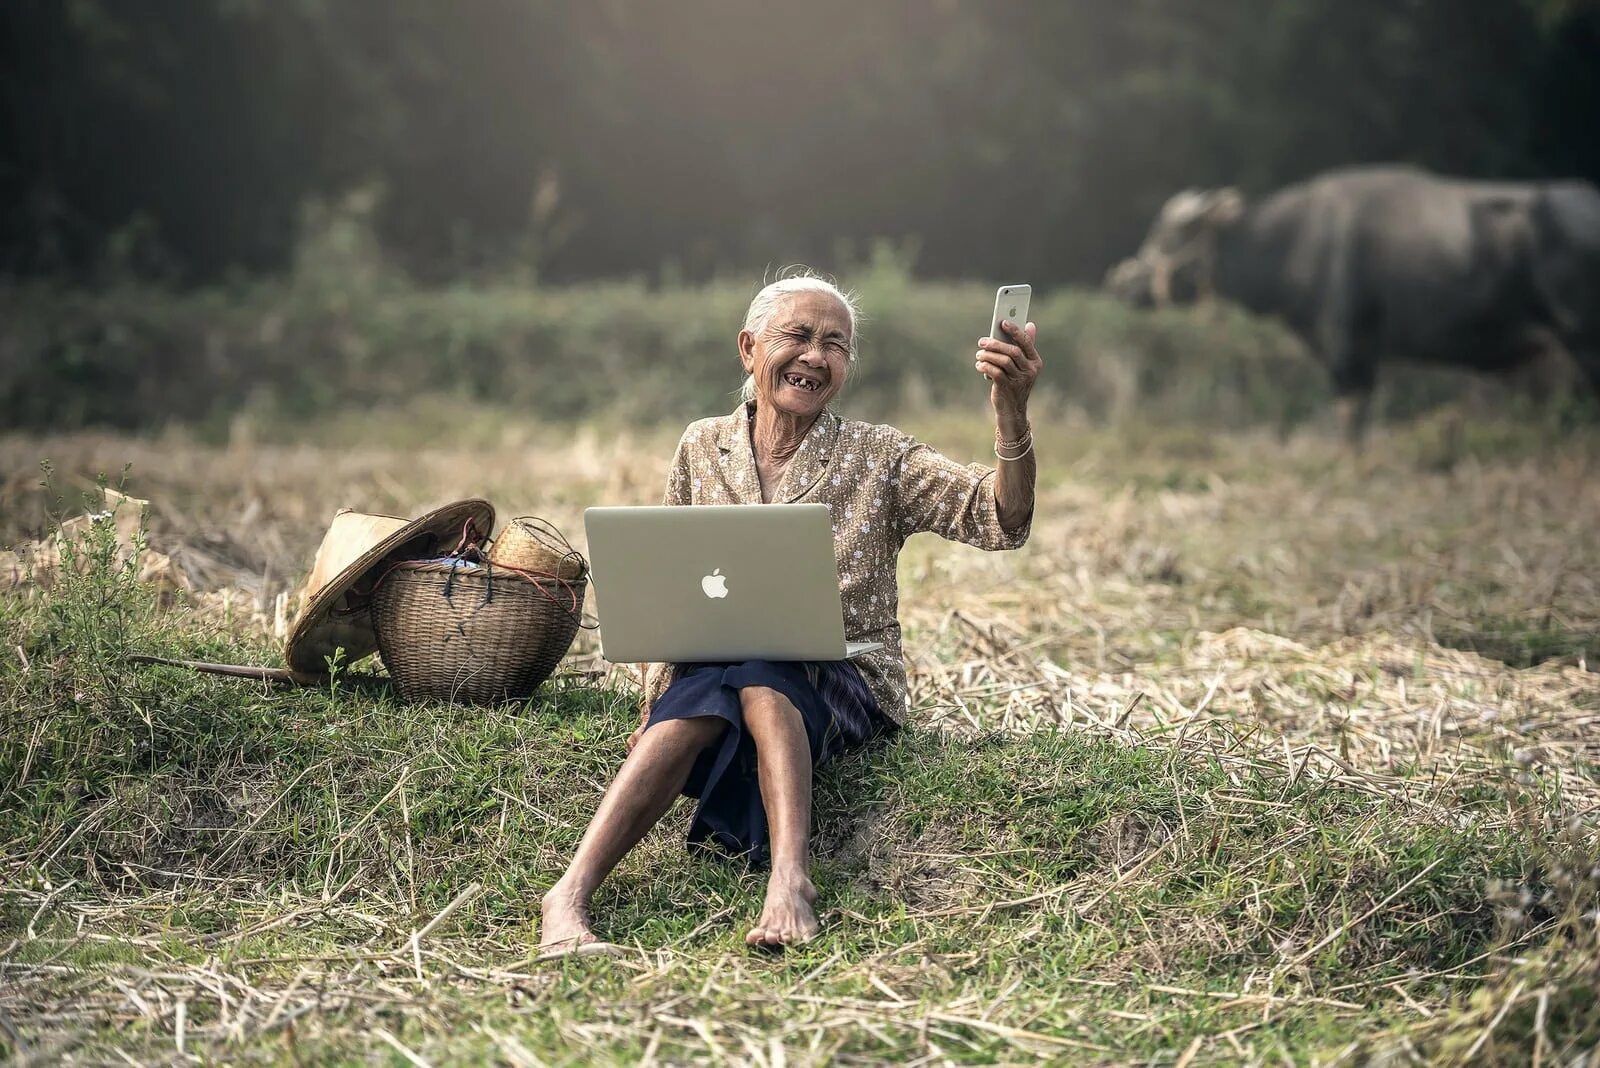 Бабка с ноутбуком. В деревне за ноутбуком. Бабушка и компьютер. Старушка с ноутбуком. Field people